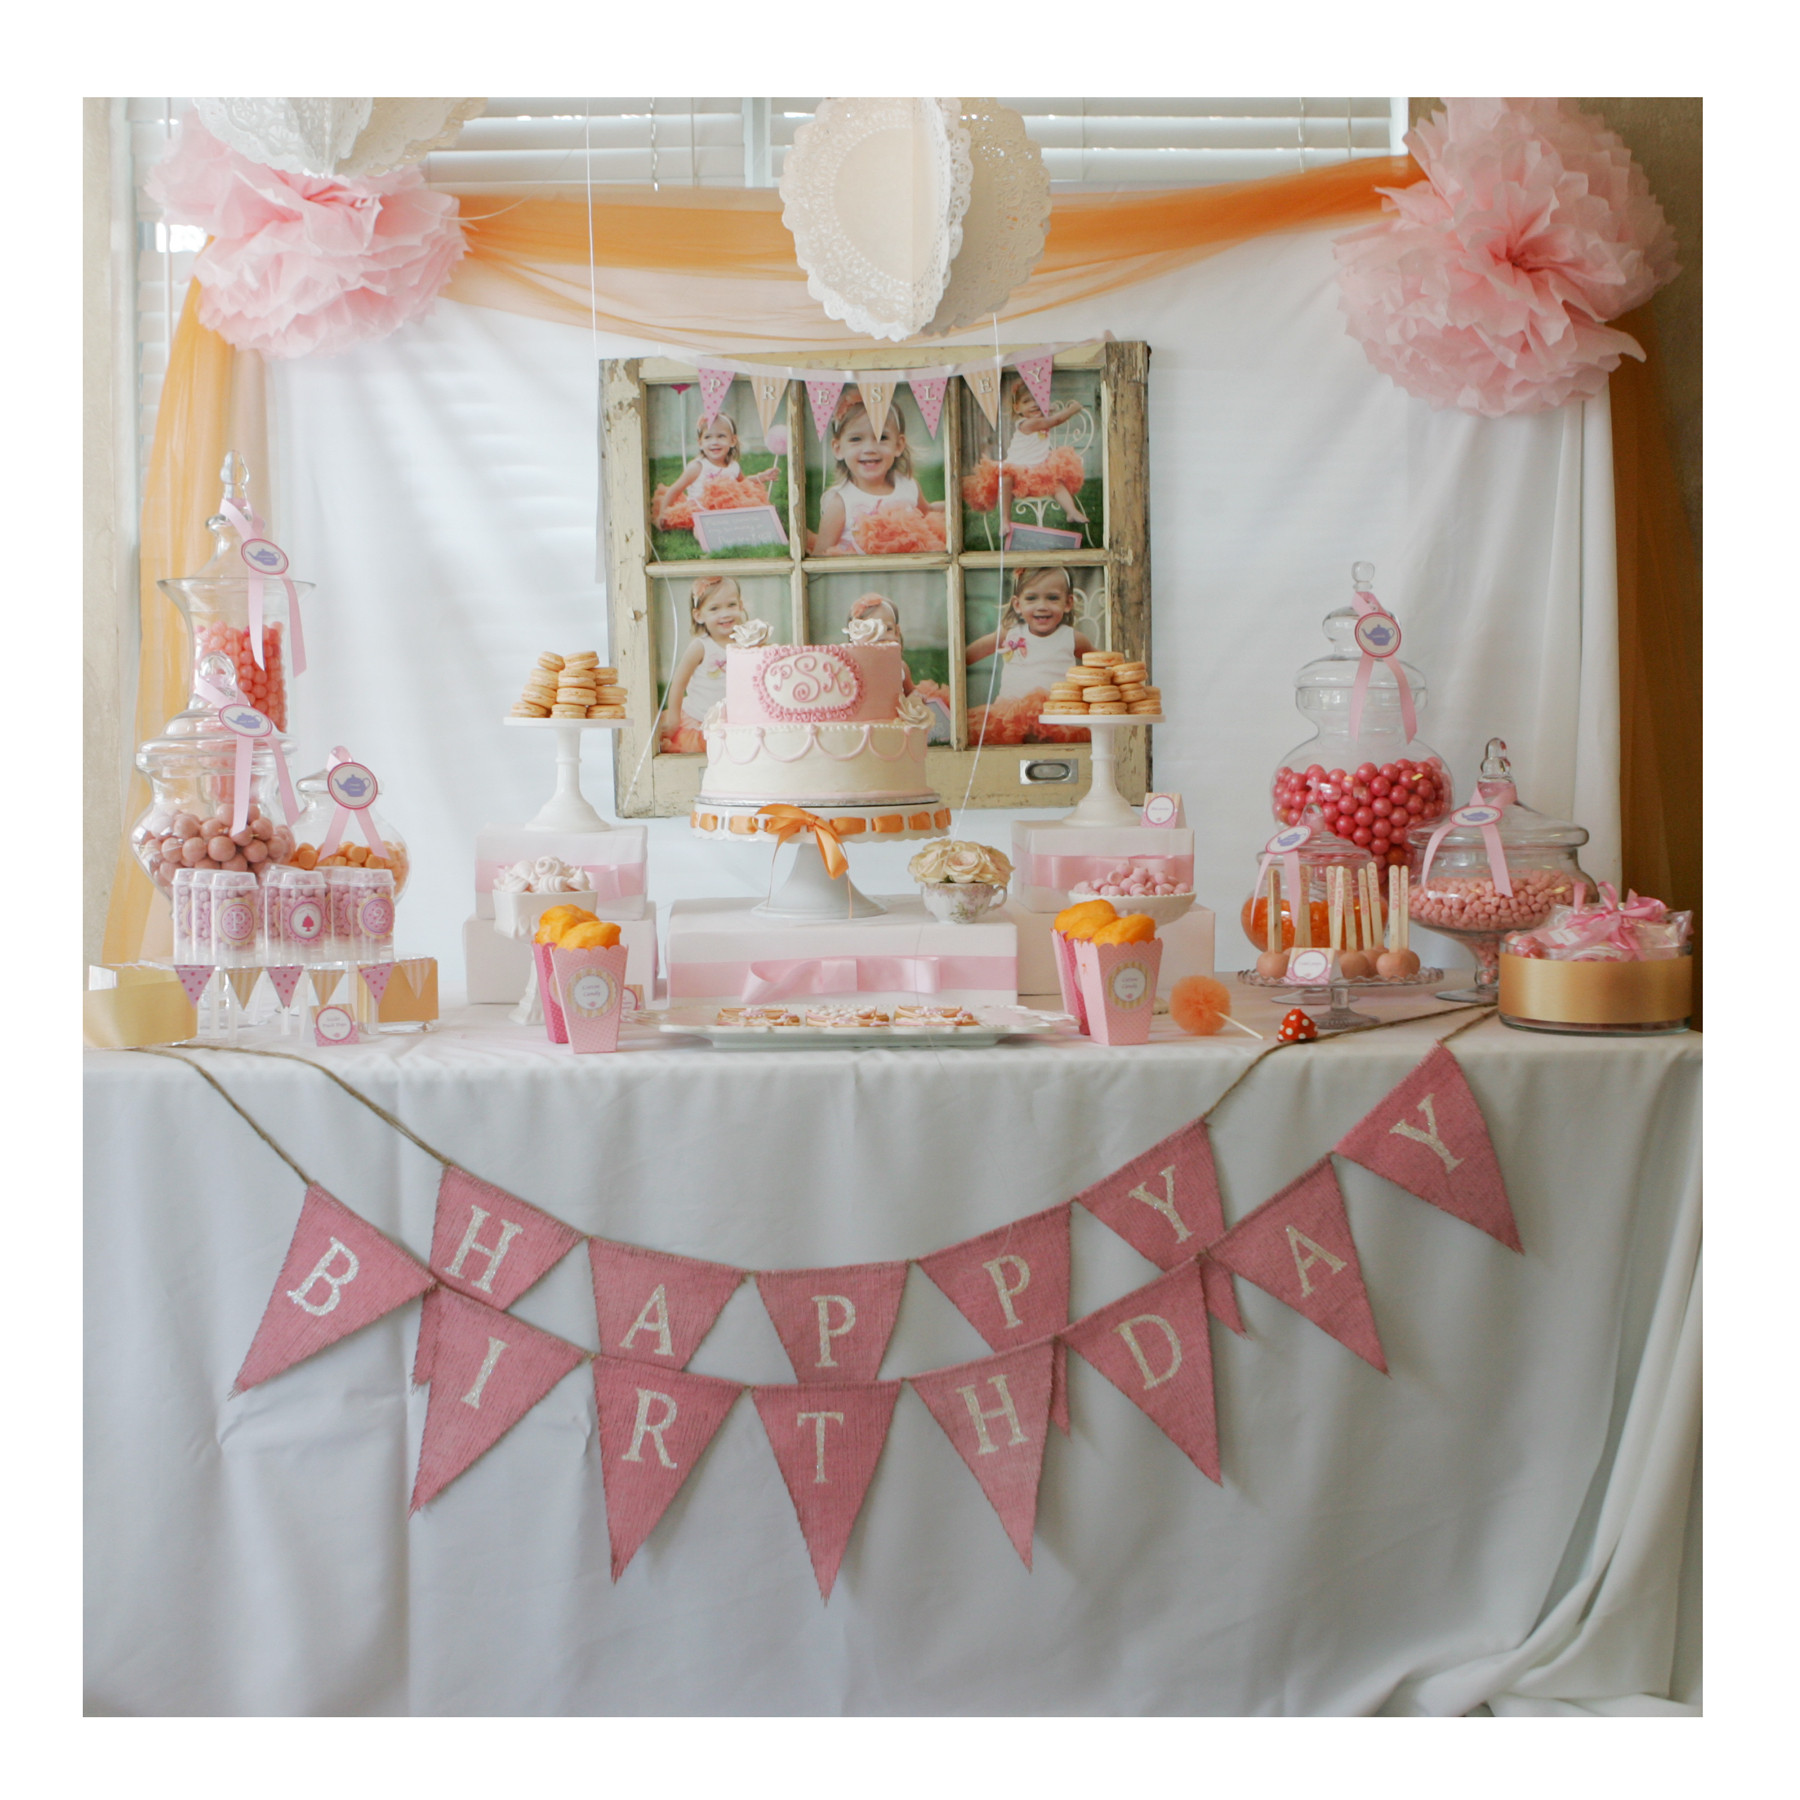 2Nd Birthday Gift Ideas For Girls
 Teacups & Tutu s 2nd Birthday Par tea Project Nursery